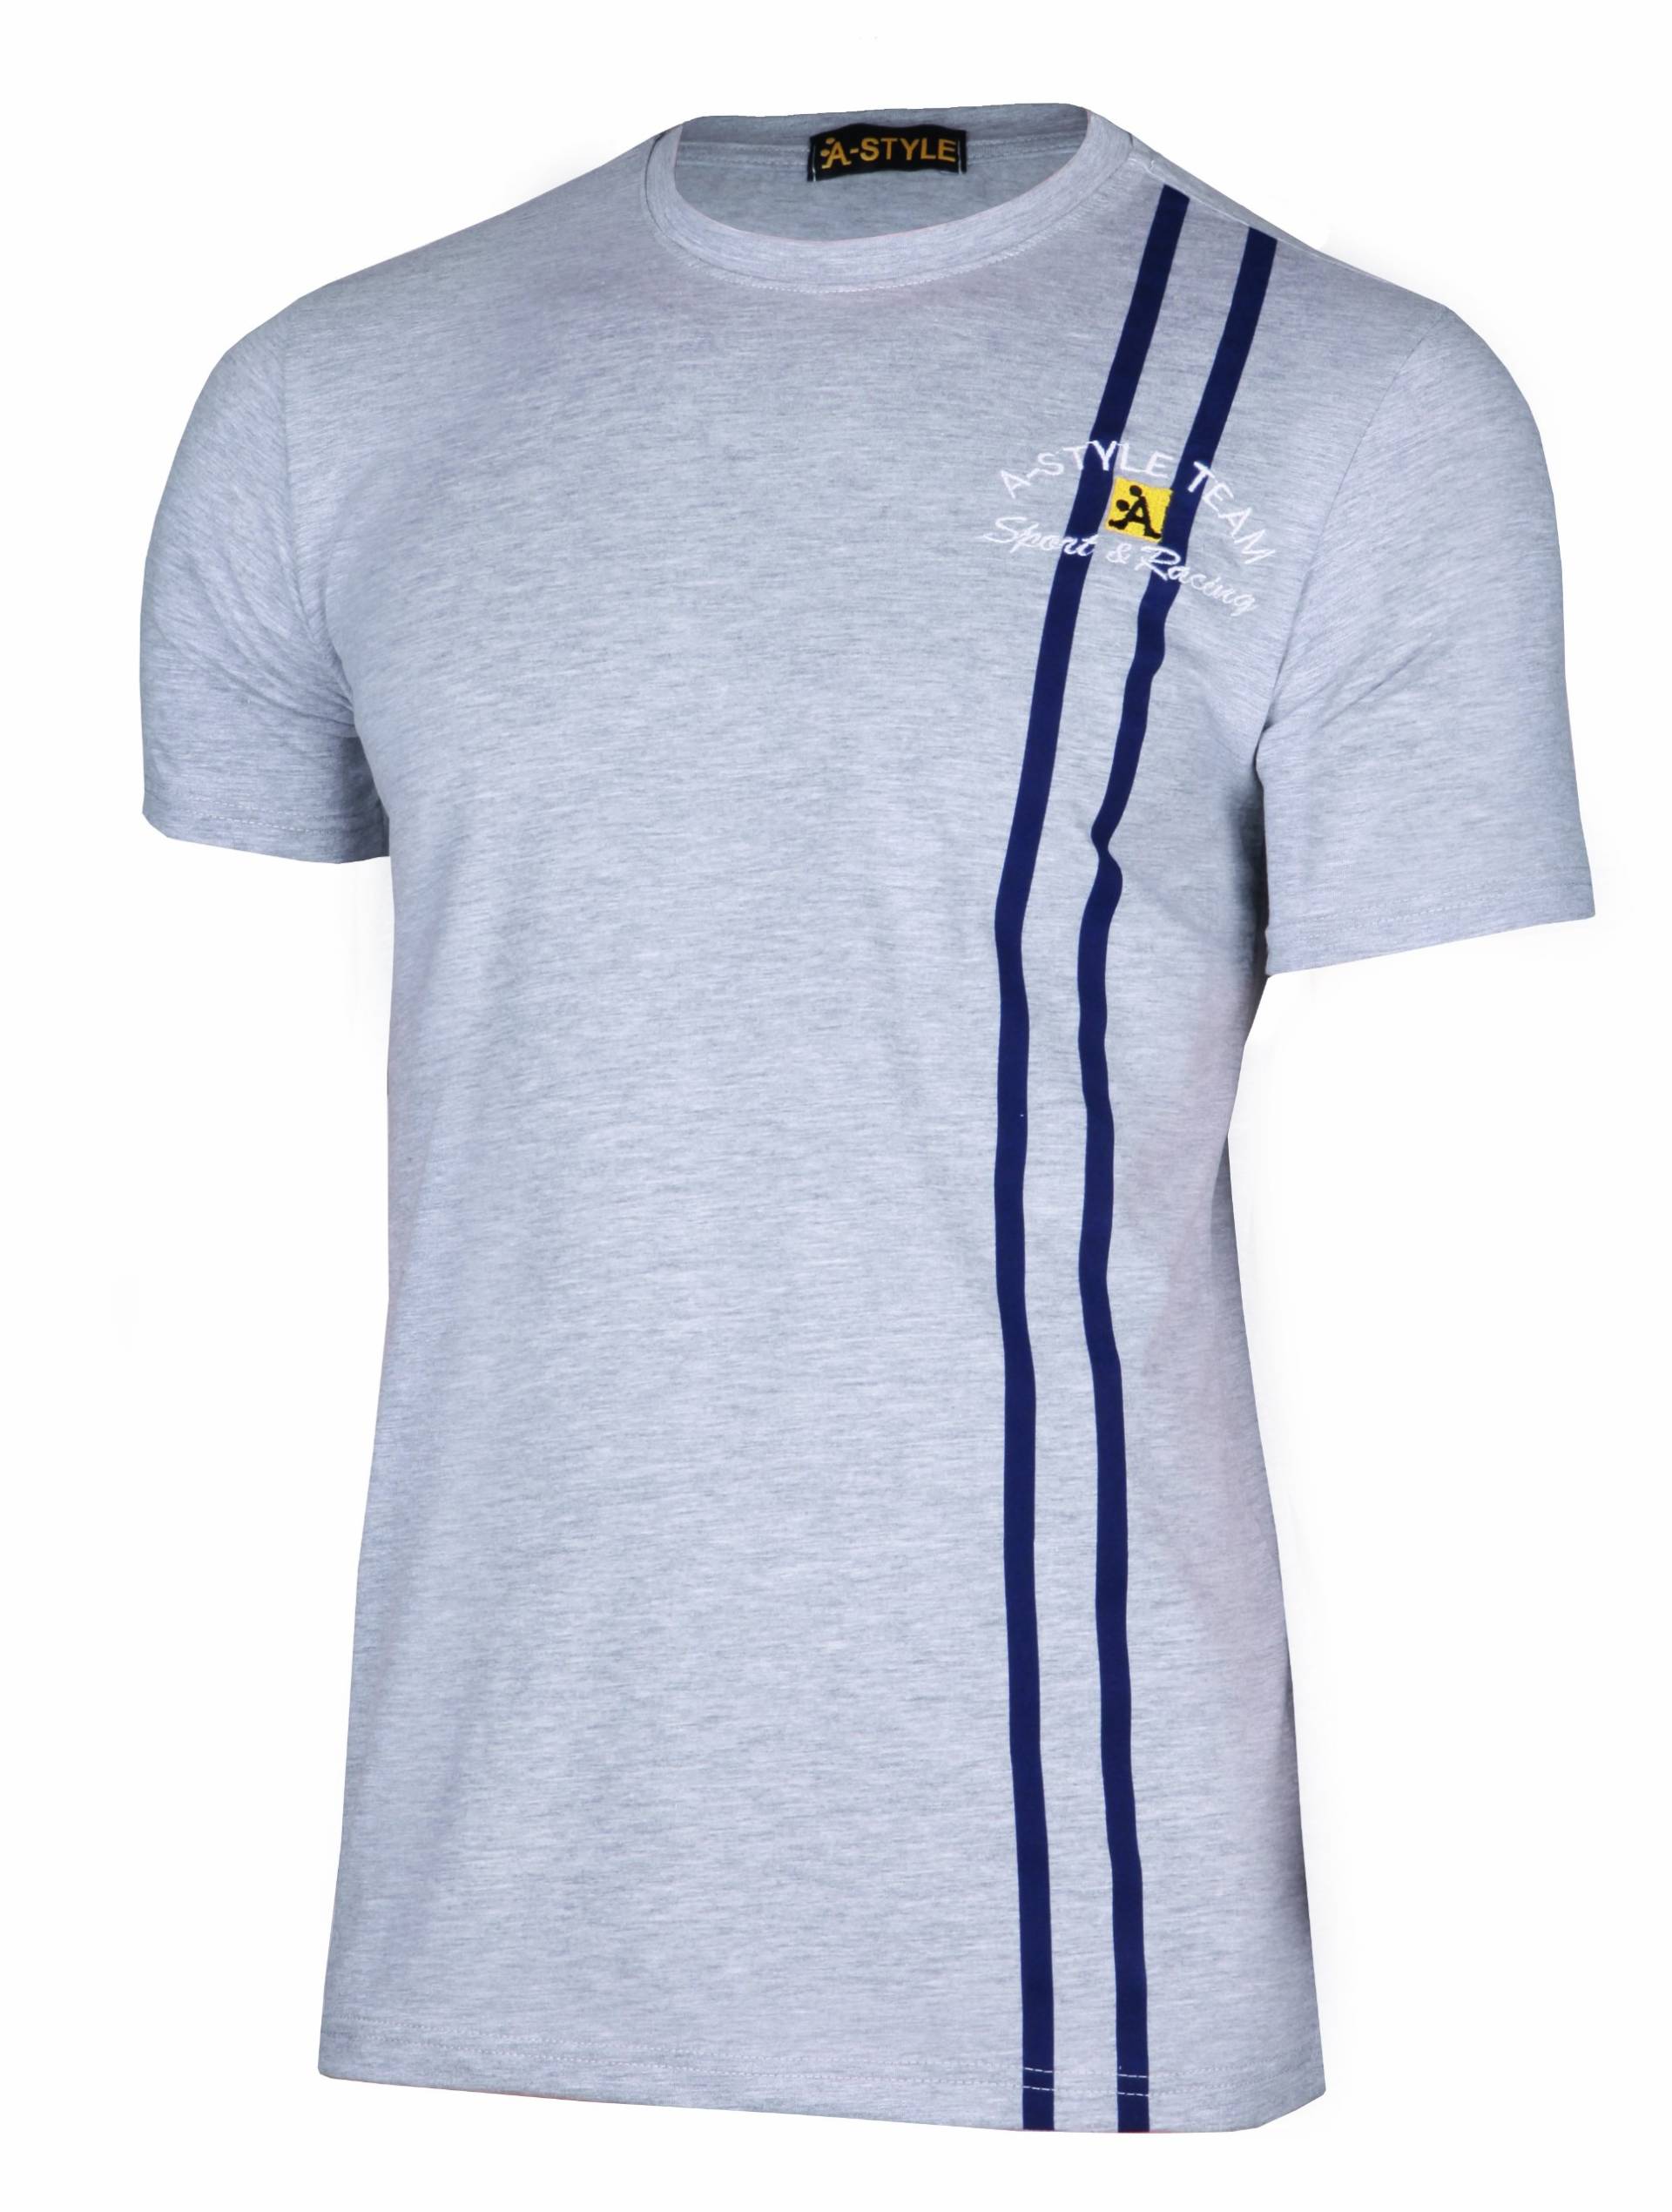 A-Style T-Shirt Stripes, Grau, XL von A-Style